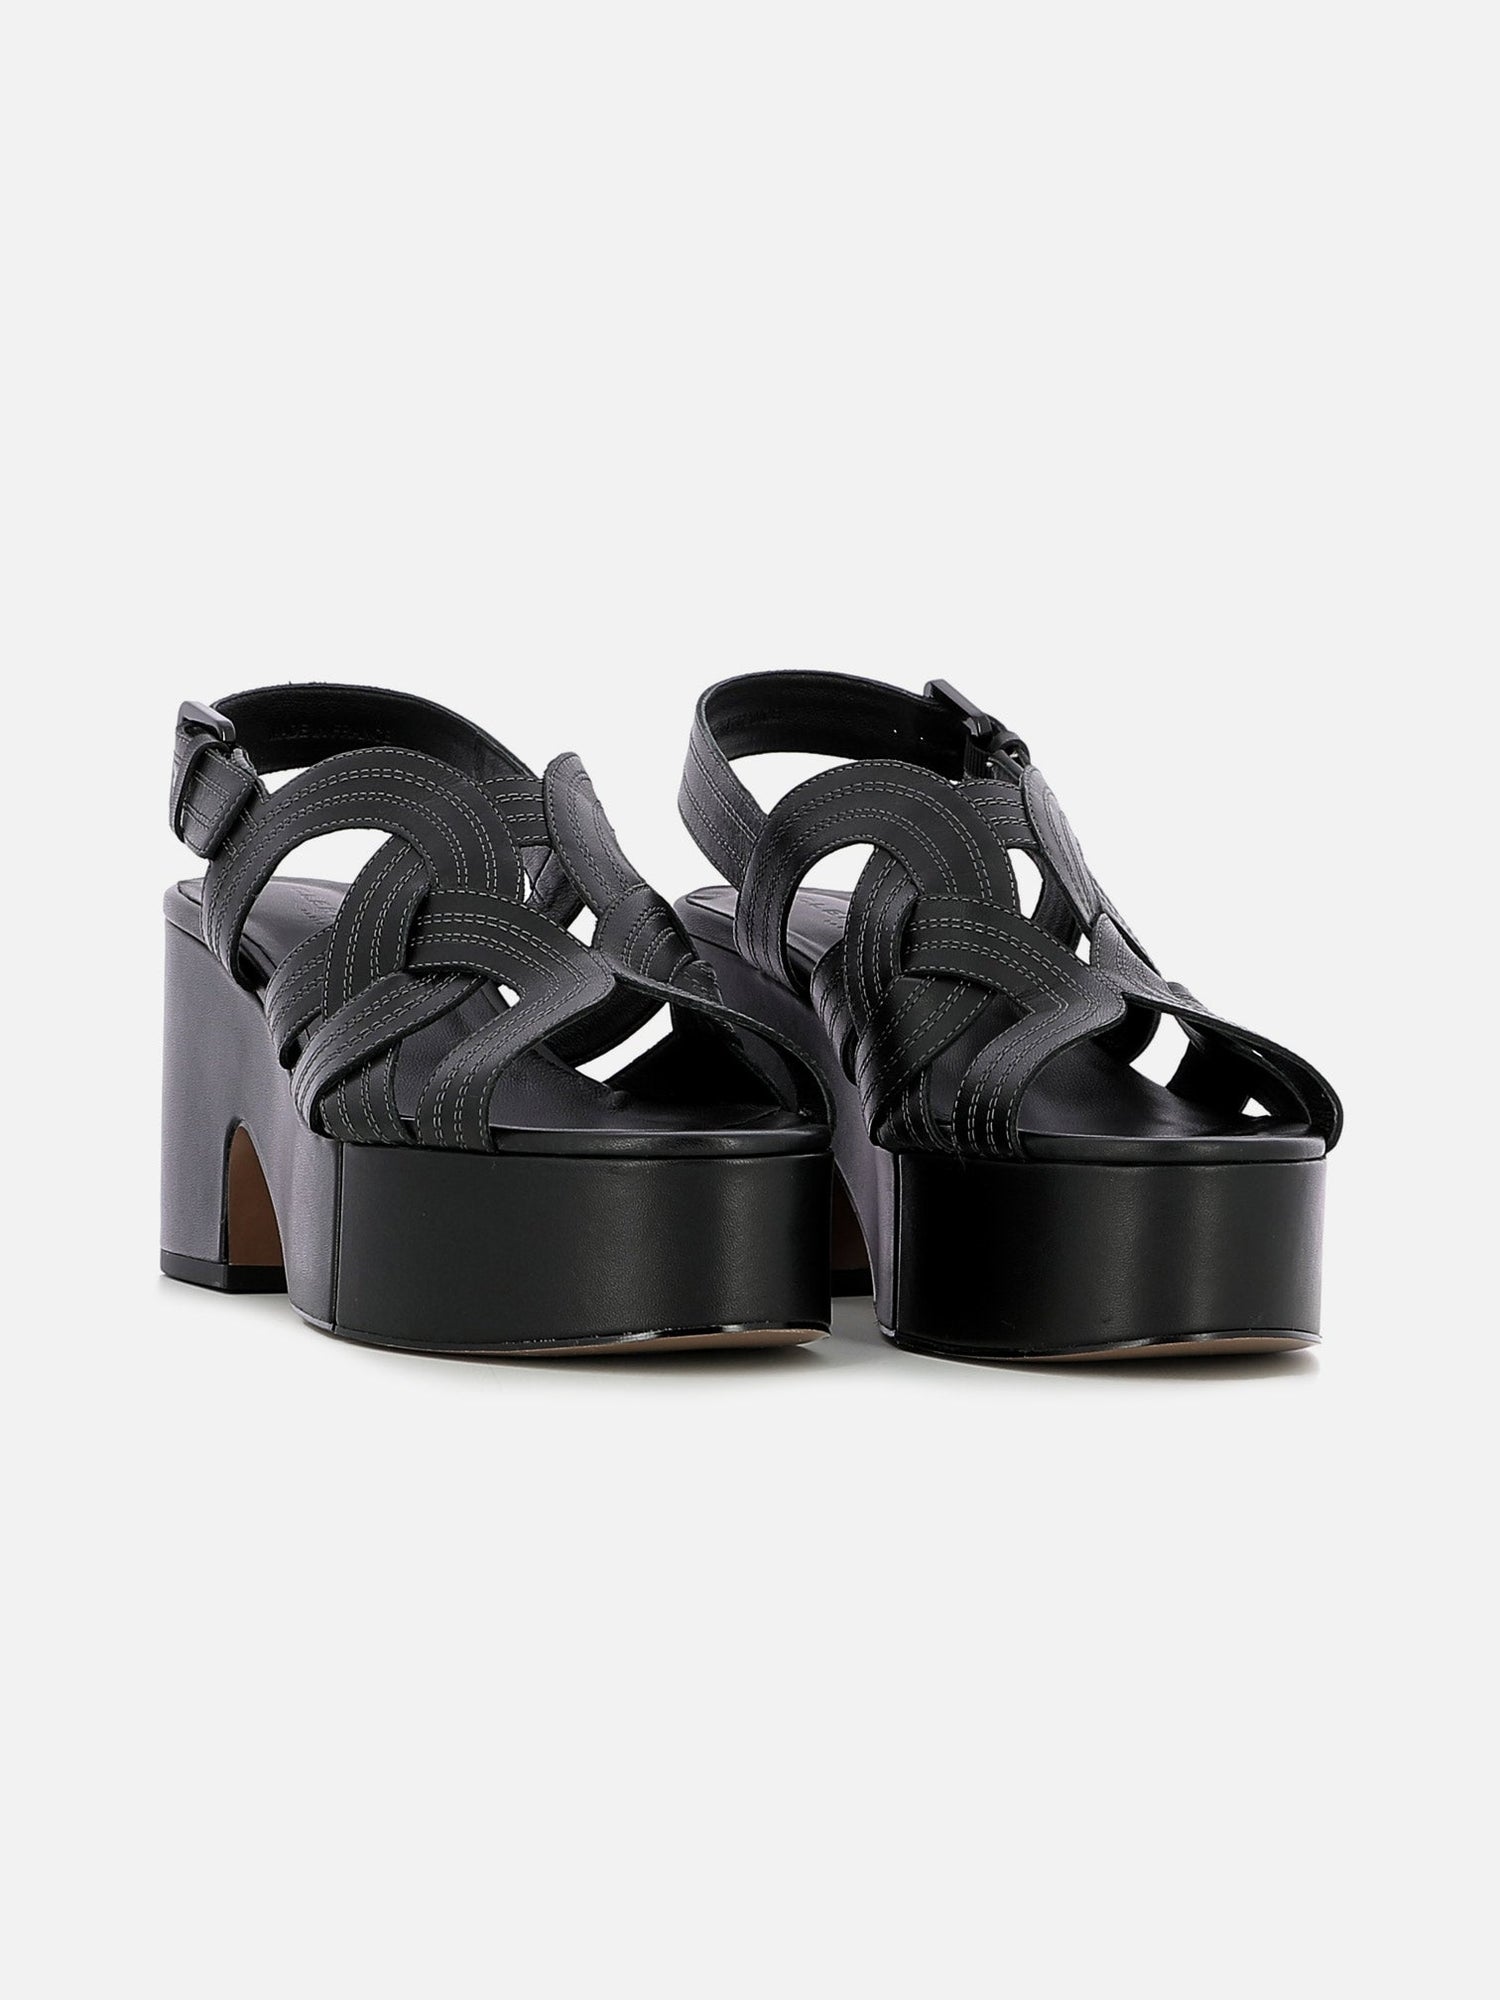 SANDALS - CHOU sandals, black - 3606063971034 - Clergerie Paris - Europe